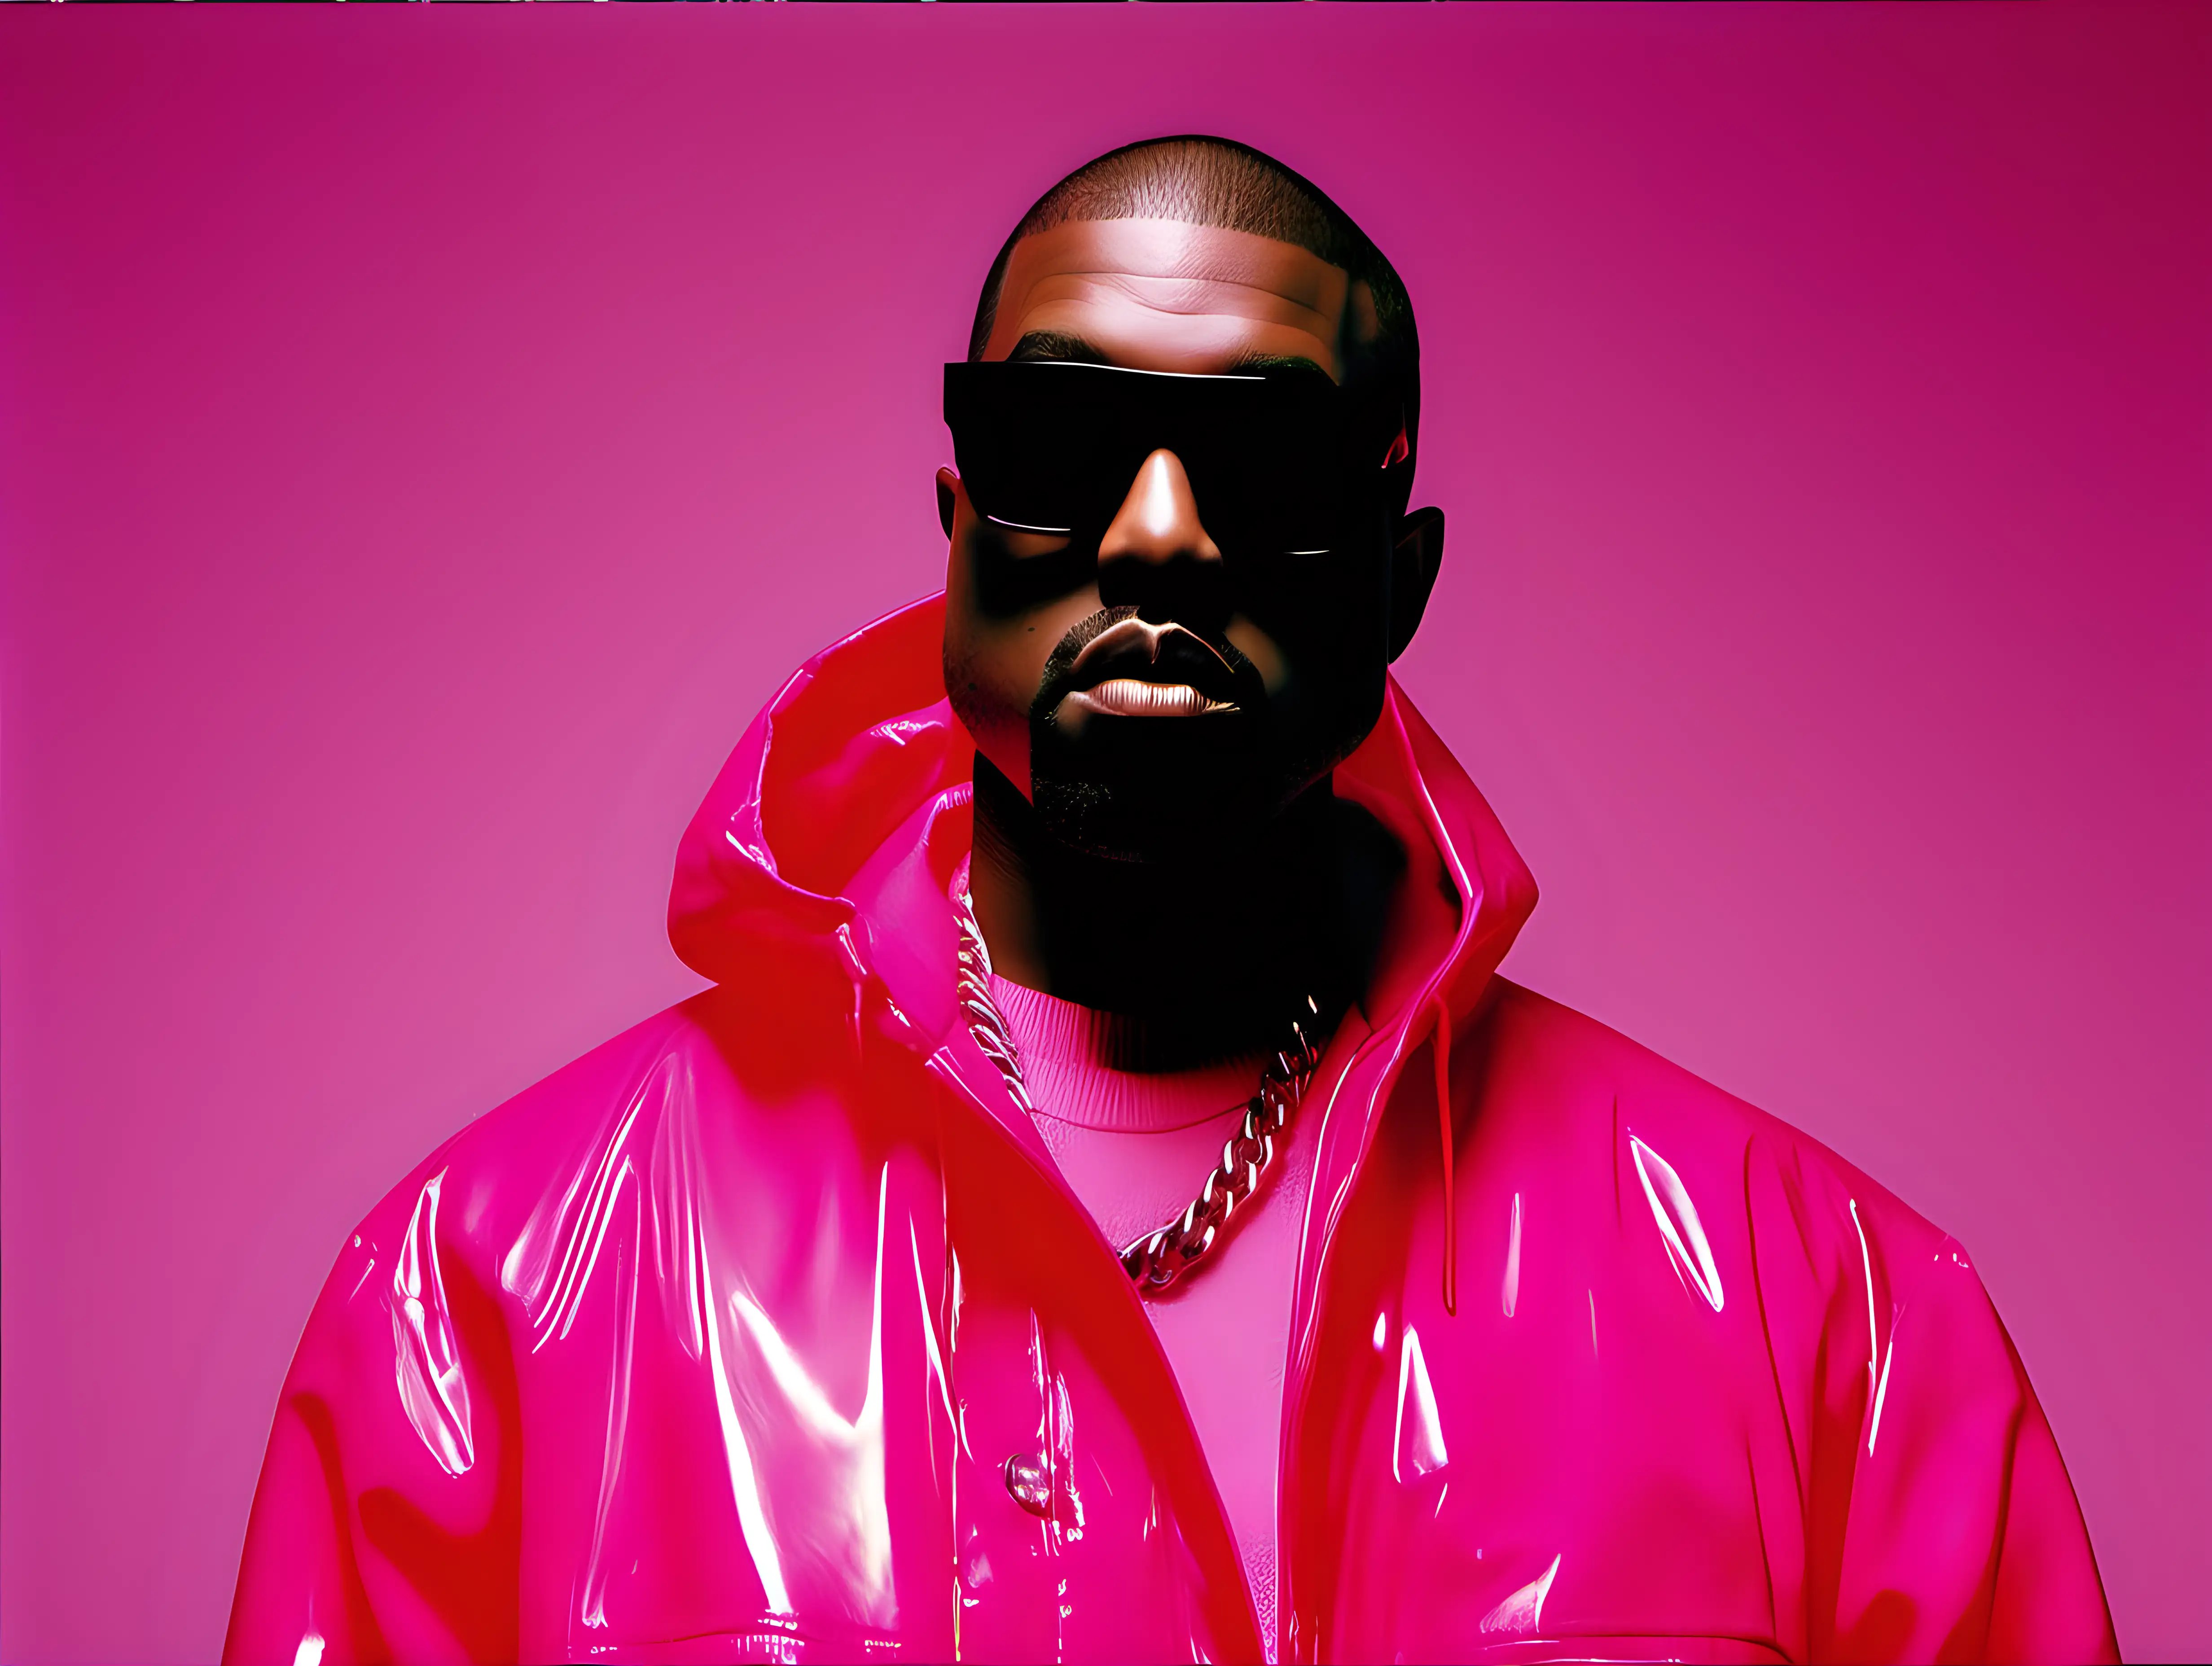 Kanye West in Striking Neon Pink Jacket Vintage Black and White Portrait